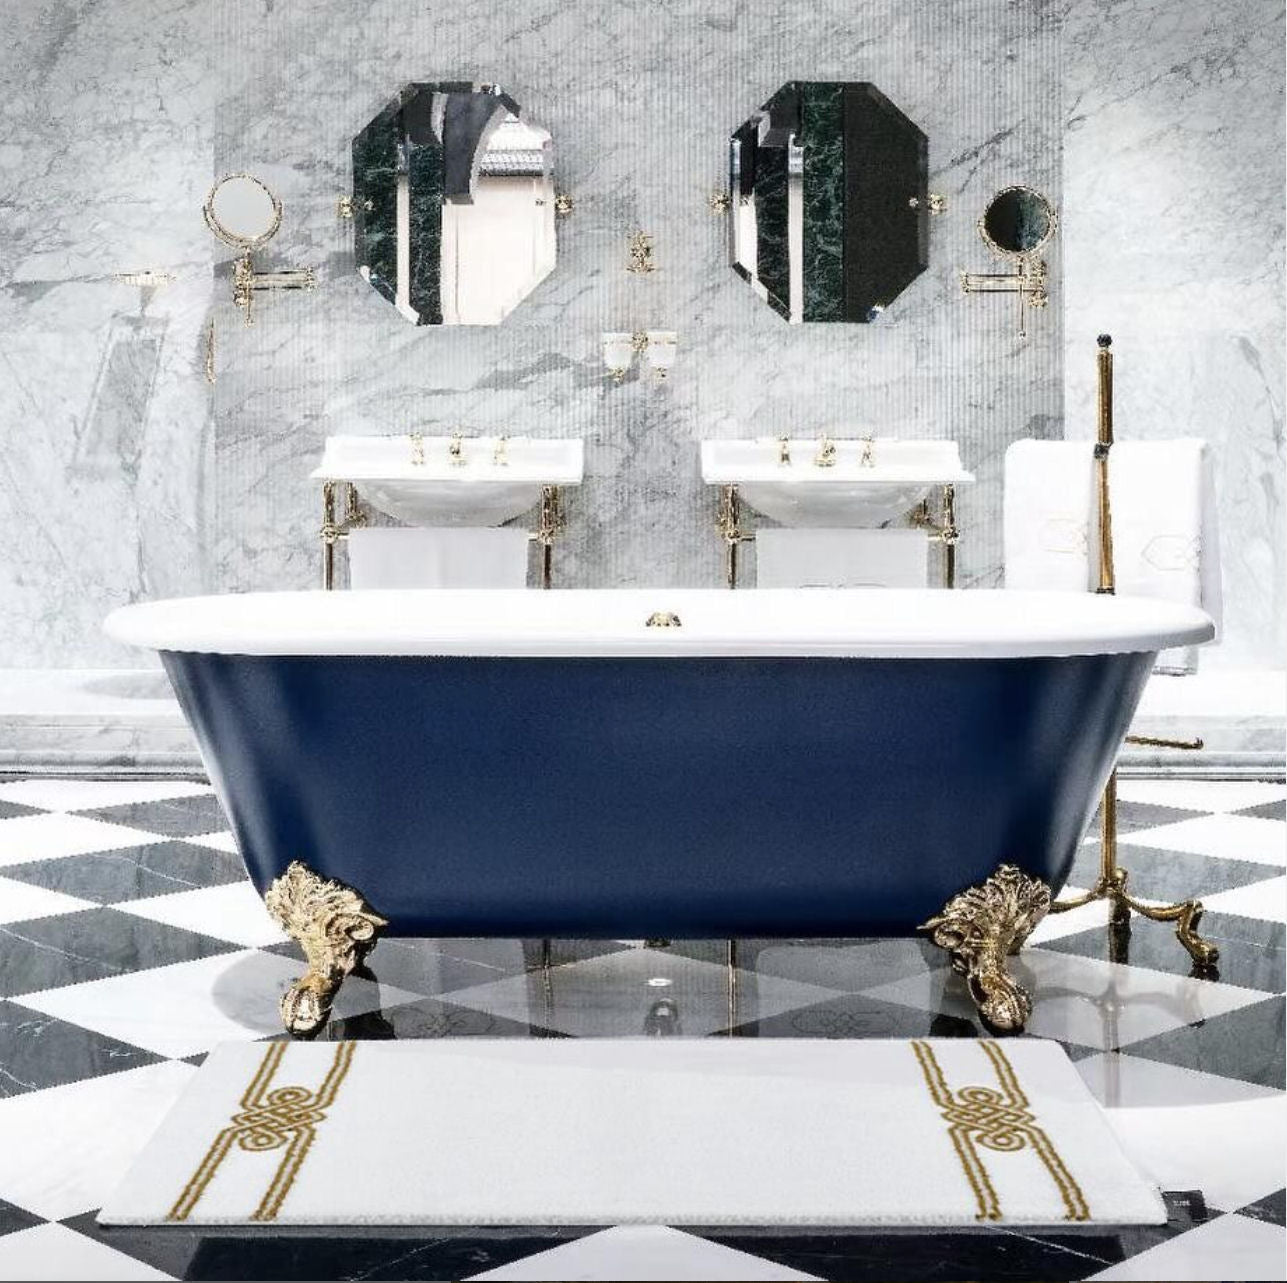 Luxury White and Gold SPENCER bath rug - |VESIMI Design|